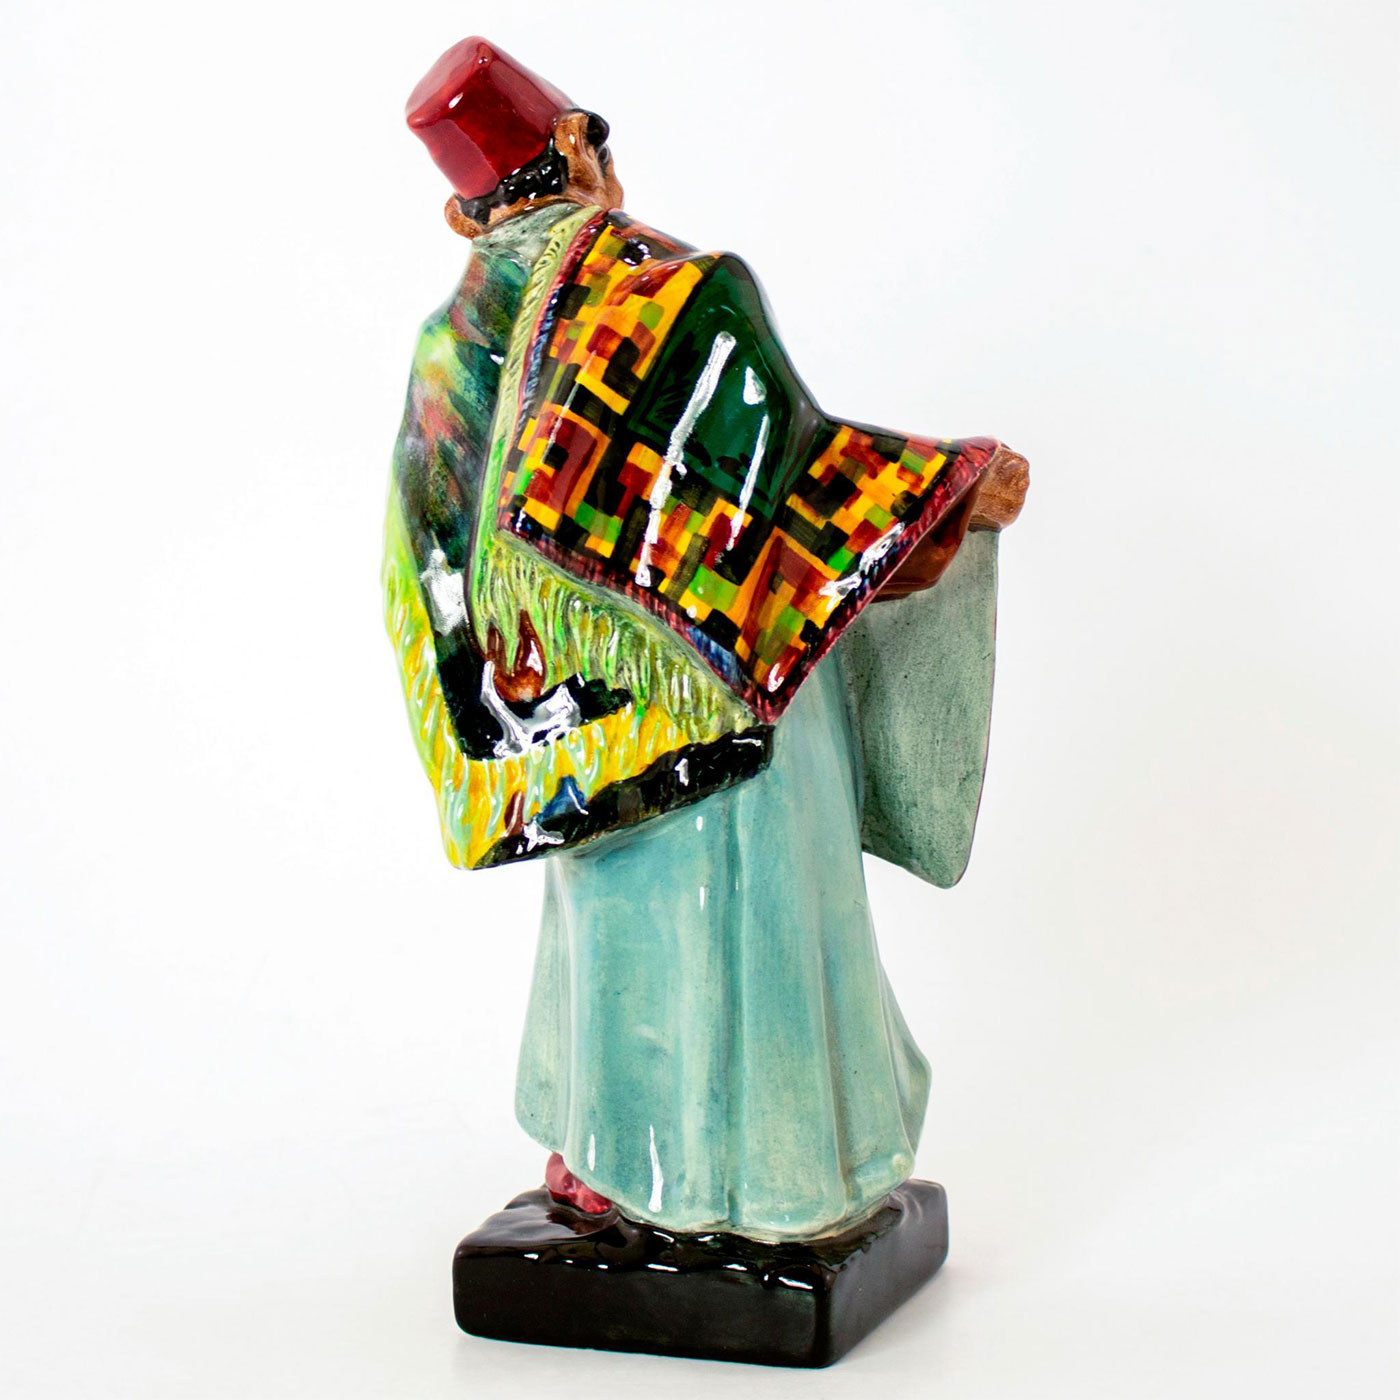 Carpet Seller, Closed Hand, HN1464 - Royal Doulton Figurine - Image 2 of 3